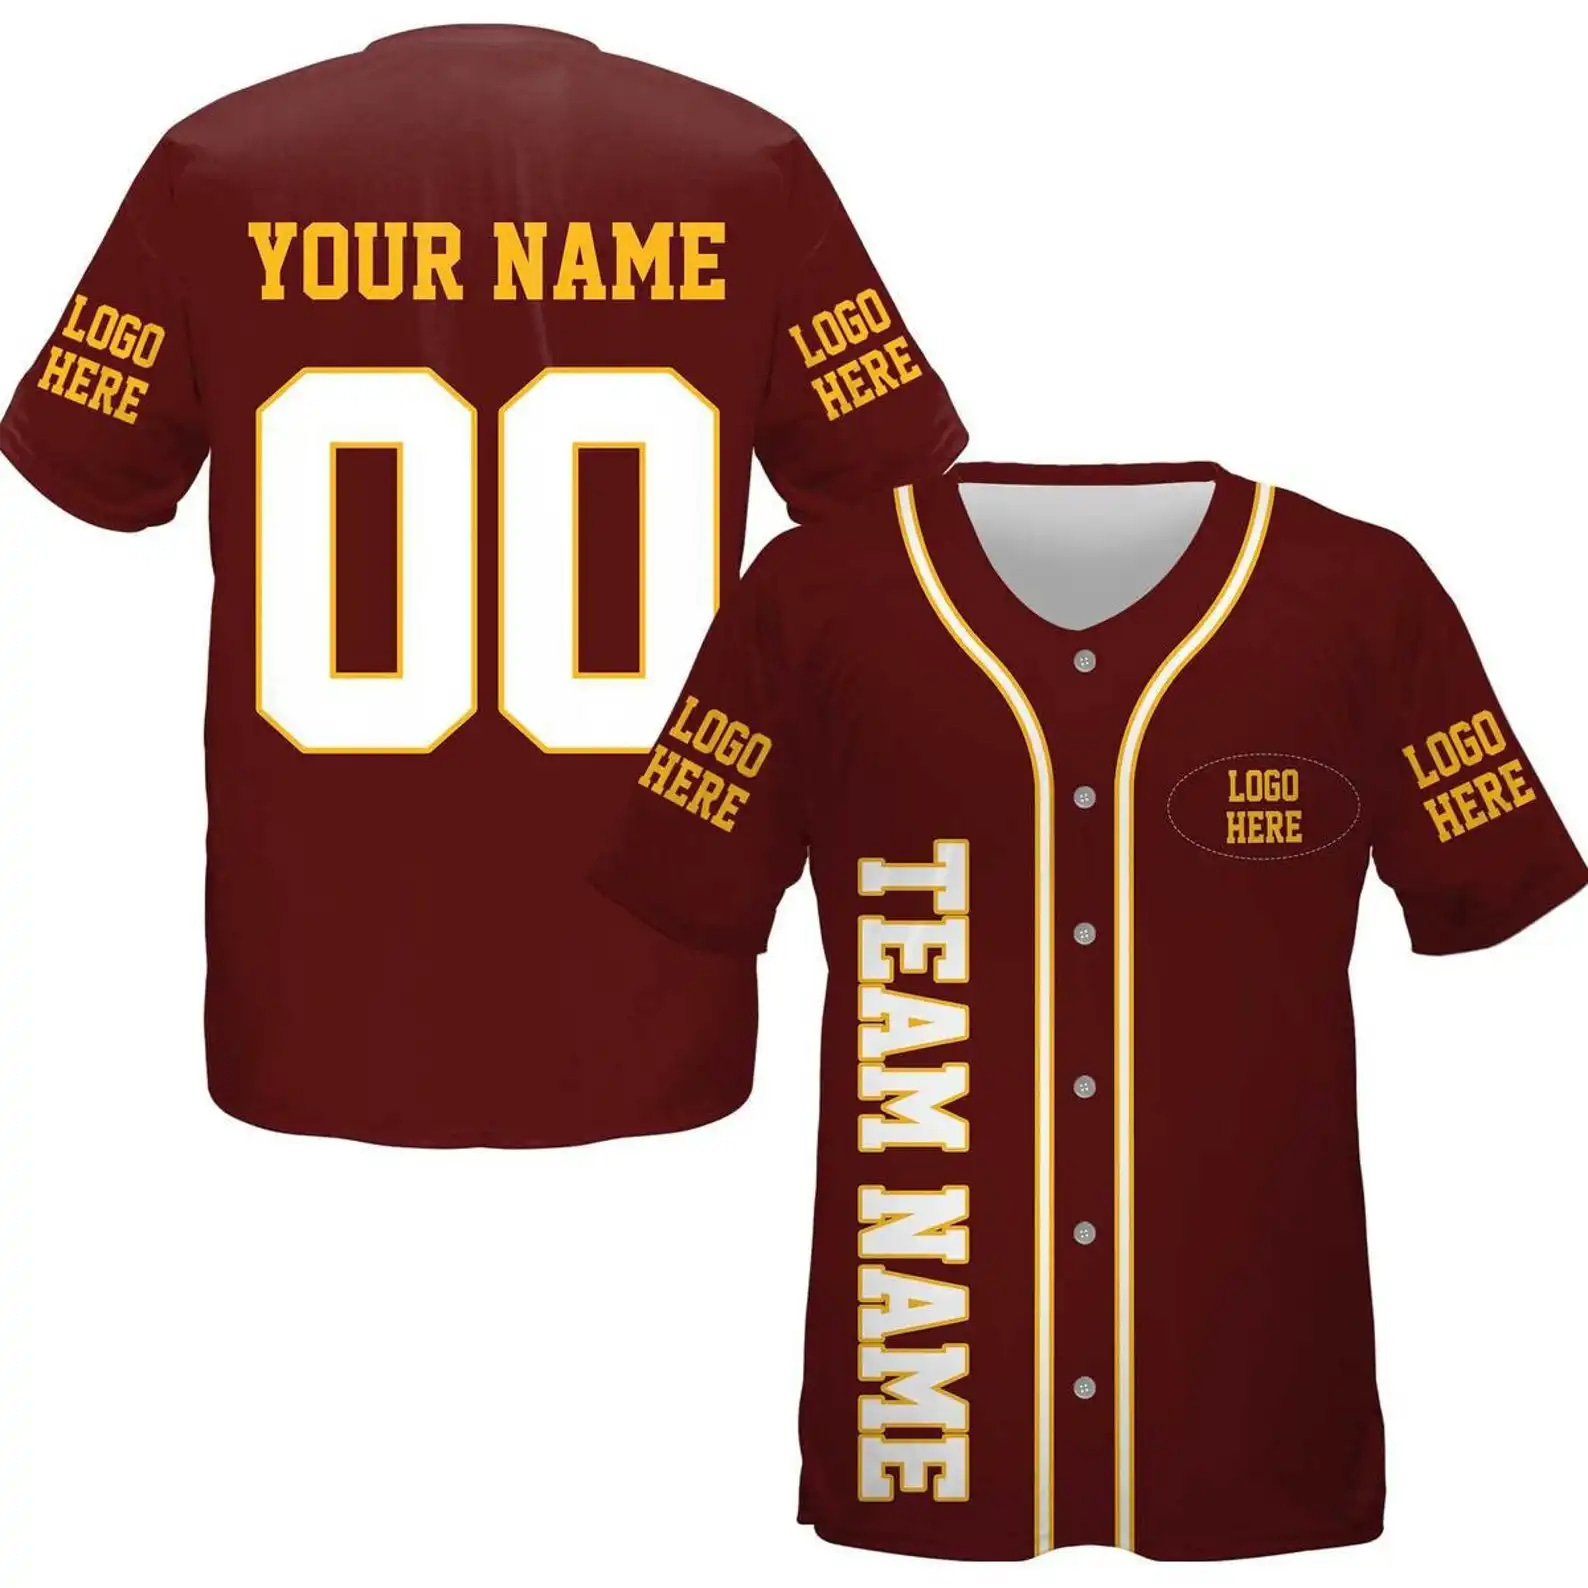 Personalized Washington Football Team Idea Gift For Fans Baseball Jersey